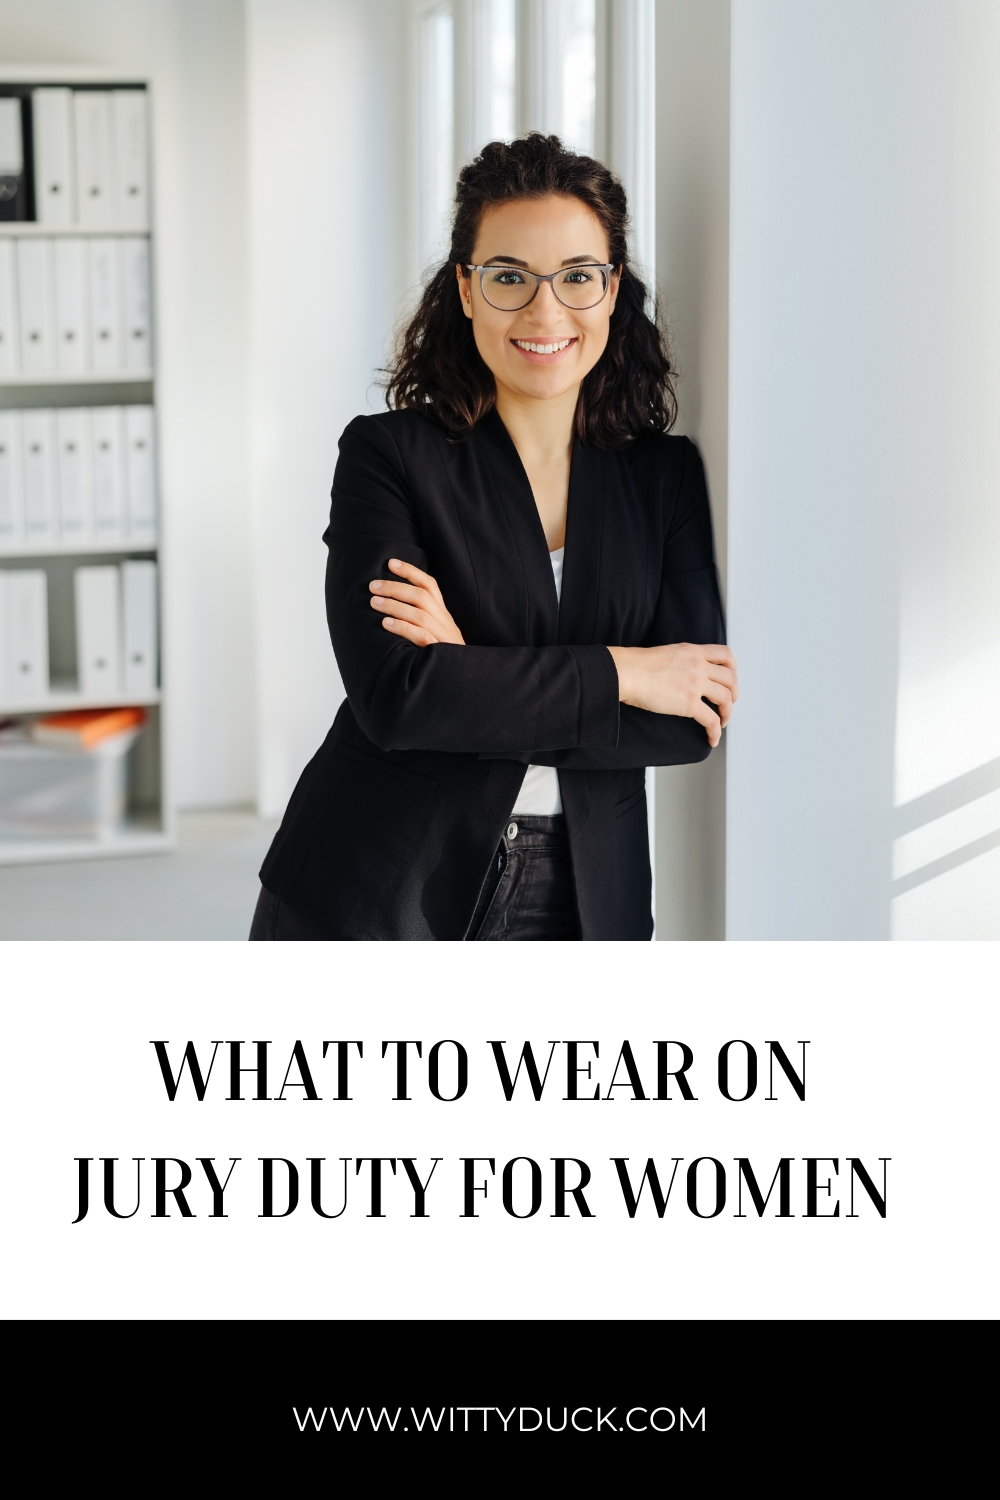 What to Wear on Jury Duty for Women